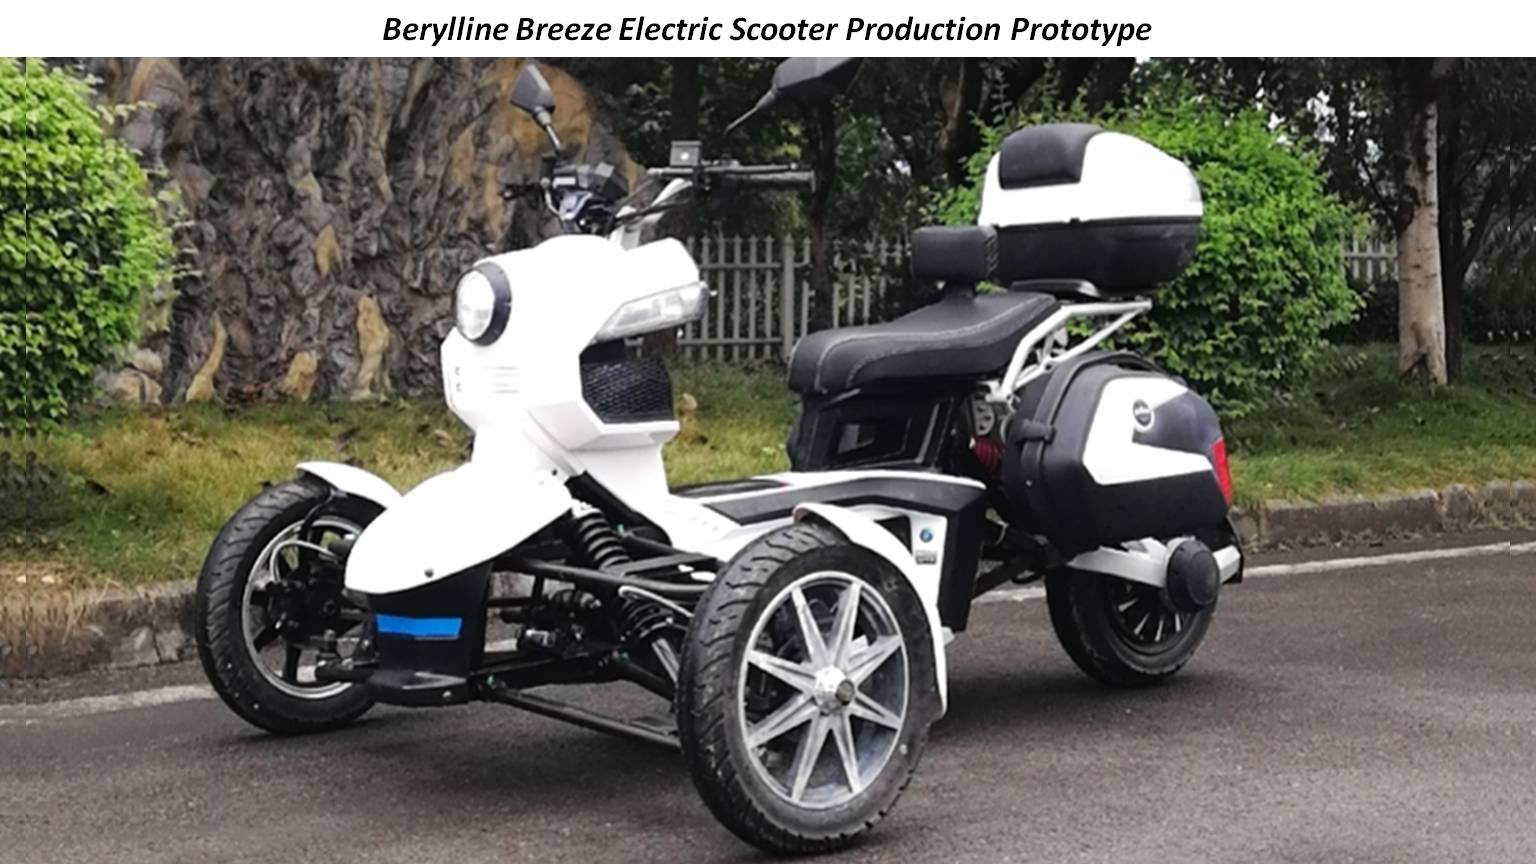 Berylline Breeze Electric Scooter Production Prototype